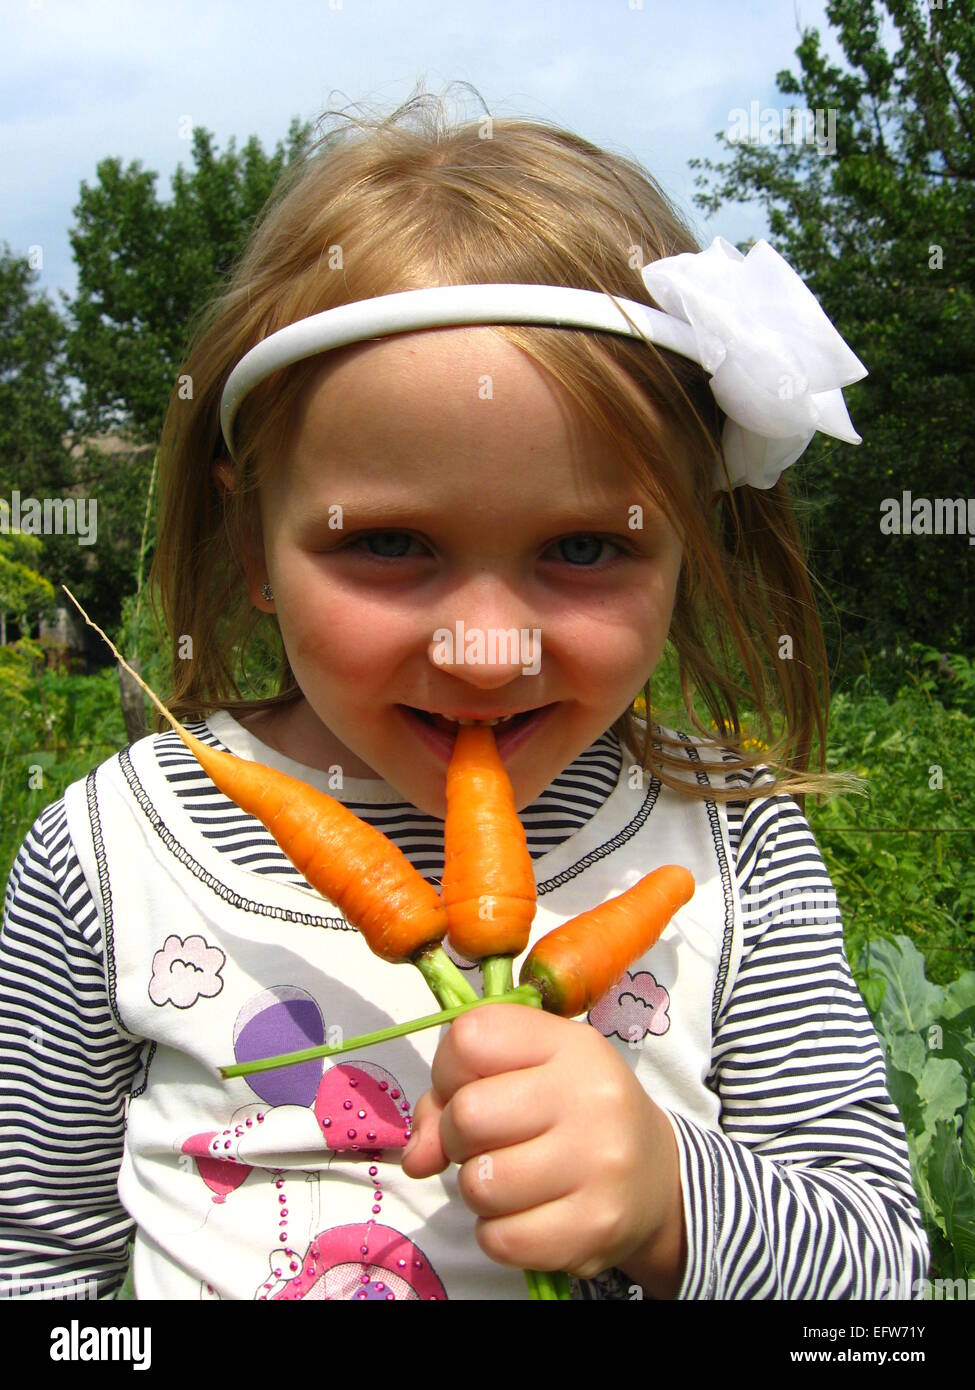 image of girl biting the ripe orange carrot Stock Photo